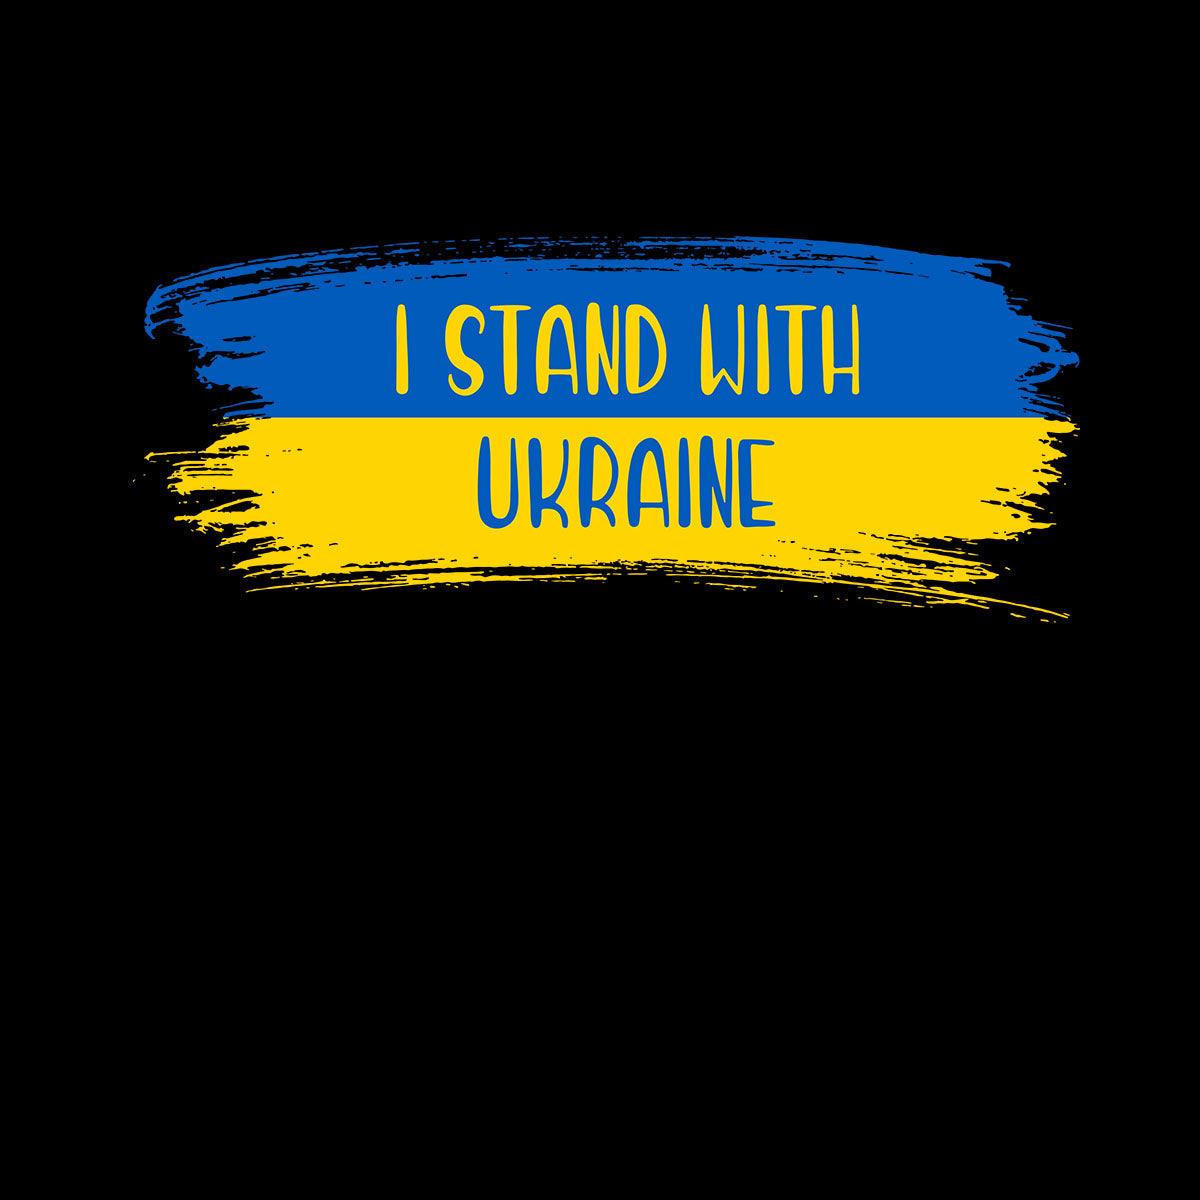 I Stand with Ukraine T-shirt, Quote Anti Russia Putin Ukraine War conflict - Kuzi Tees